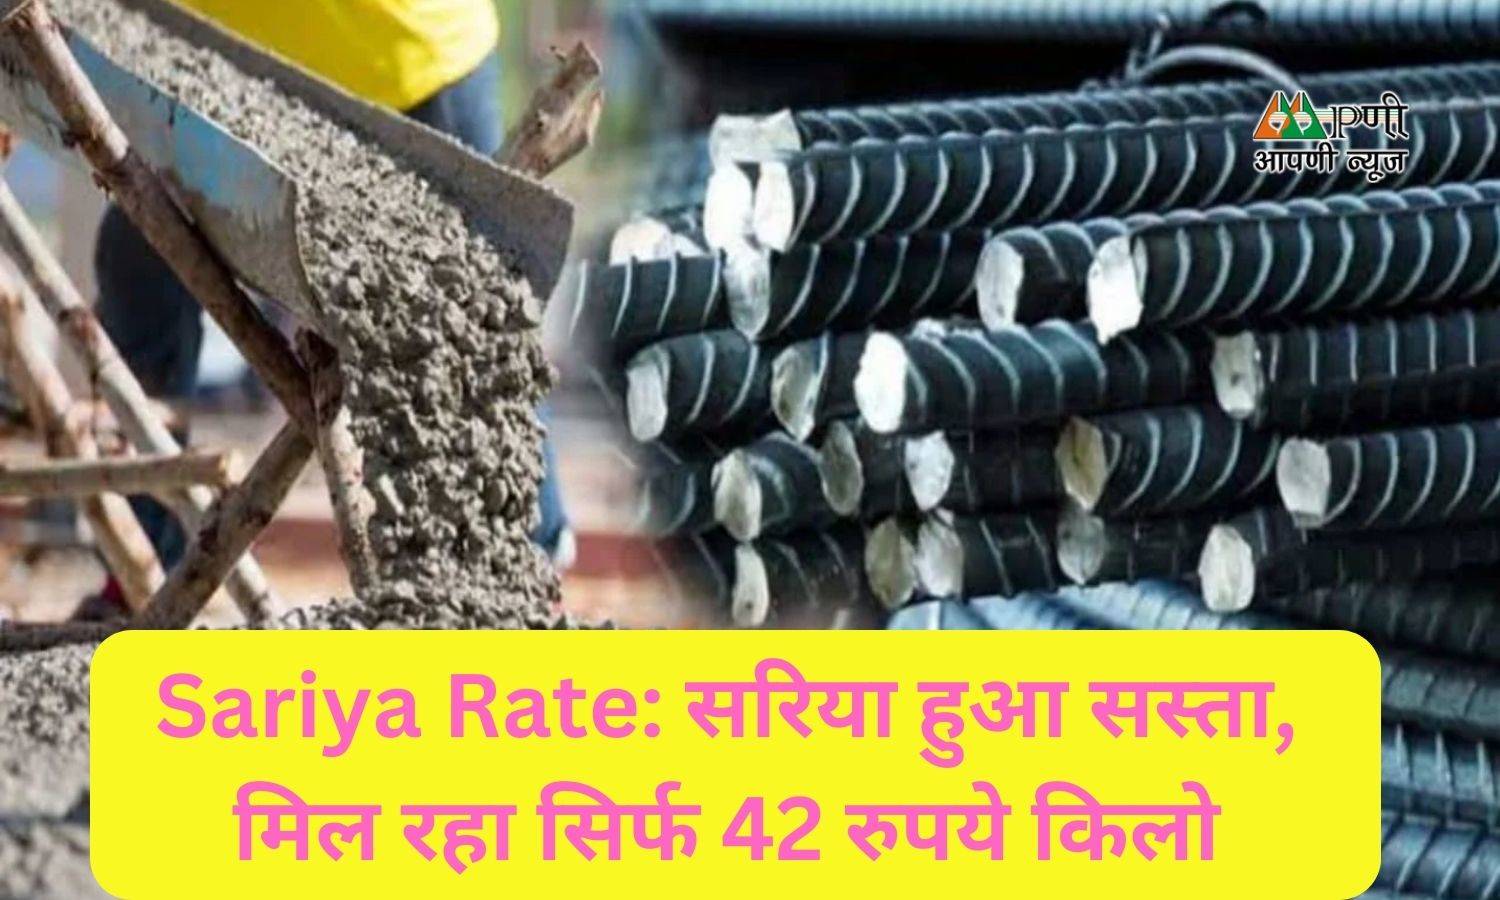 Sariya Rate: सरिया हुआ सस्ता, मिल रहा सिर्फ 42 रुपये किलो